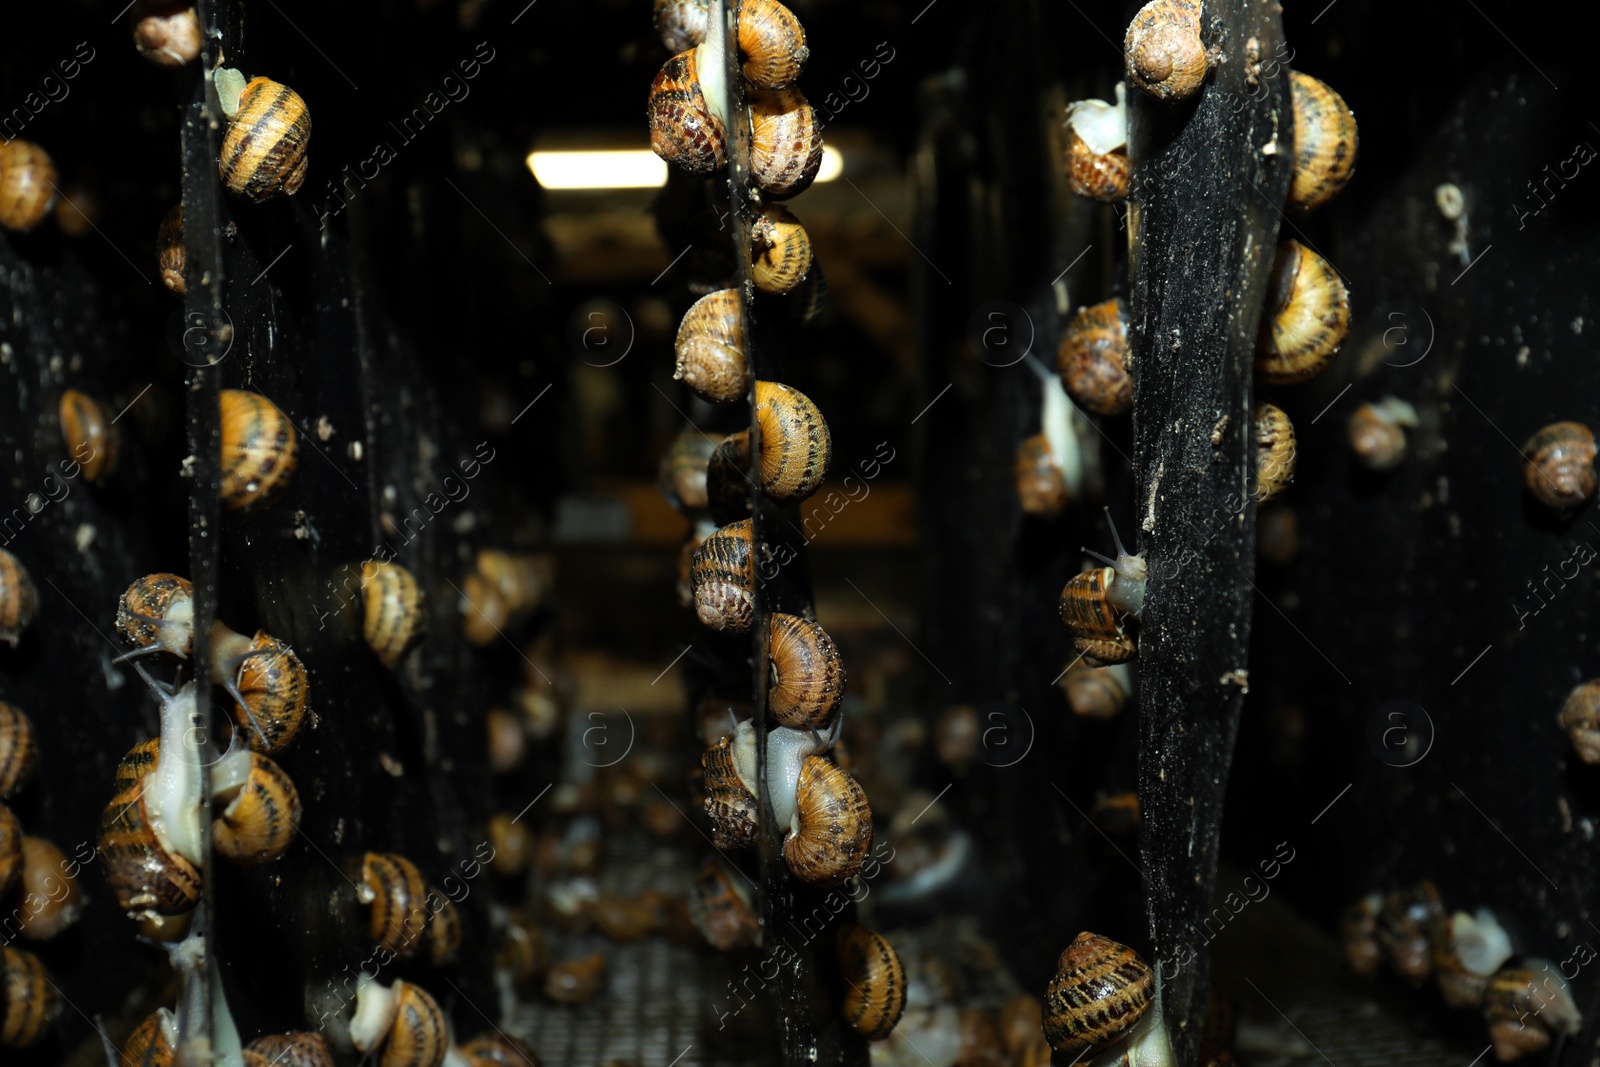 Photo of Many snails crawling on black walls indoors